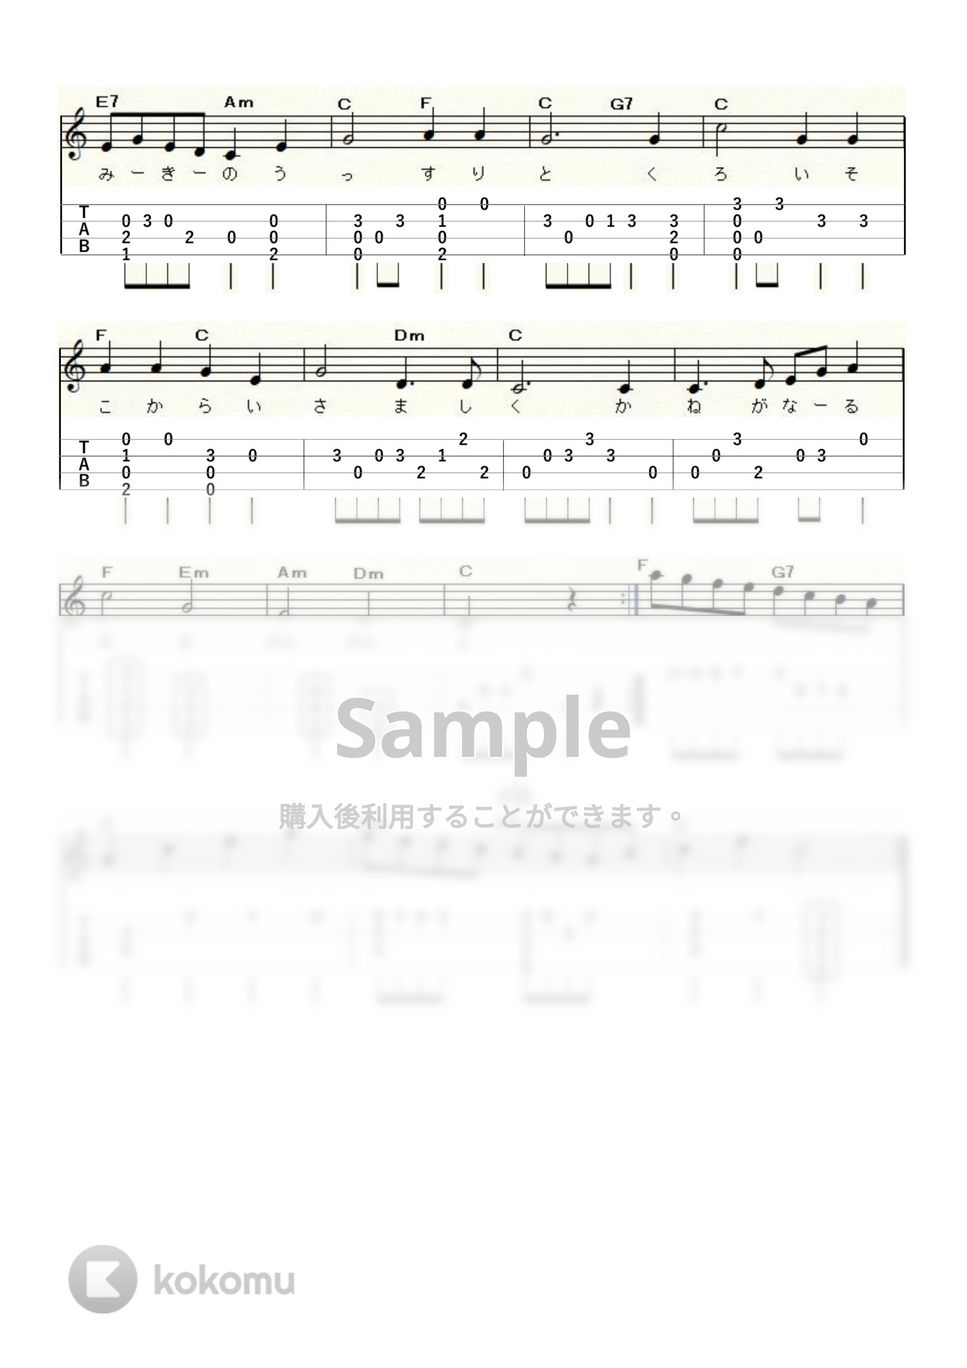 牧場の朝(原曲) (ｳｸﾚﾚｿﾛ / High-G,Low-G / 中級) by ukulelepapa